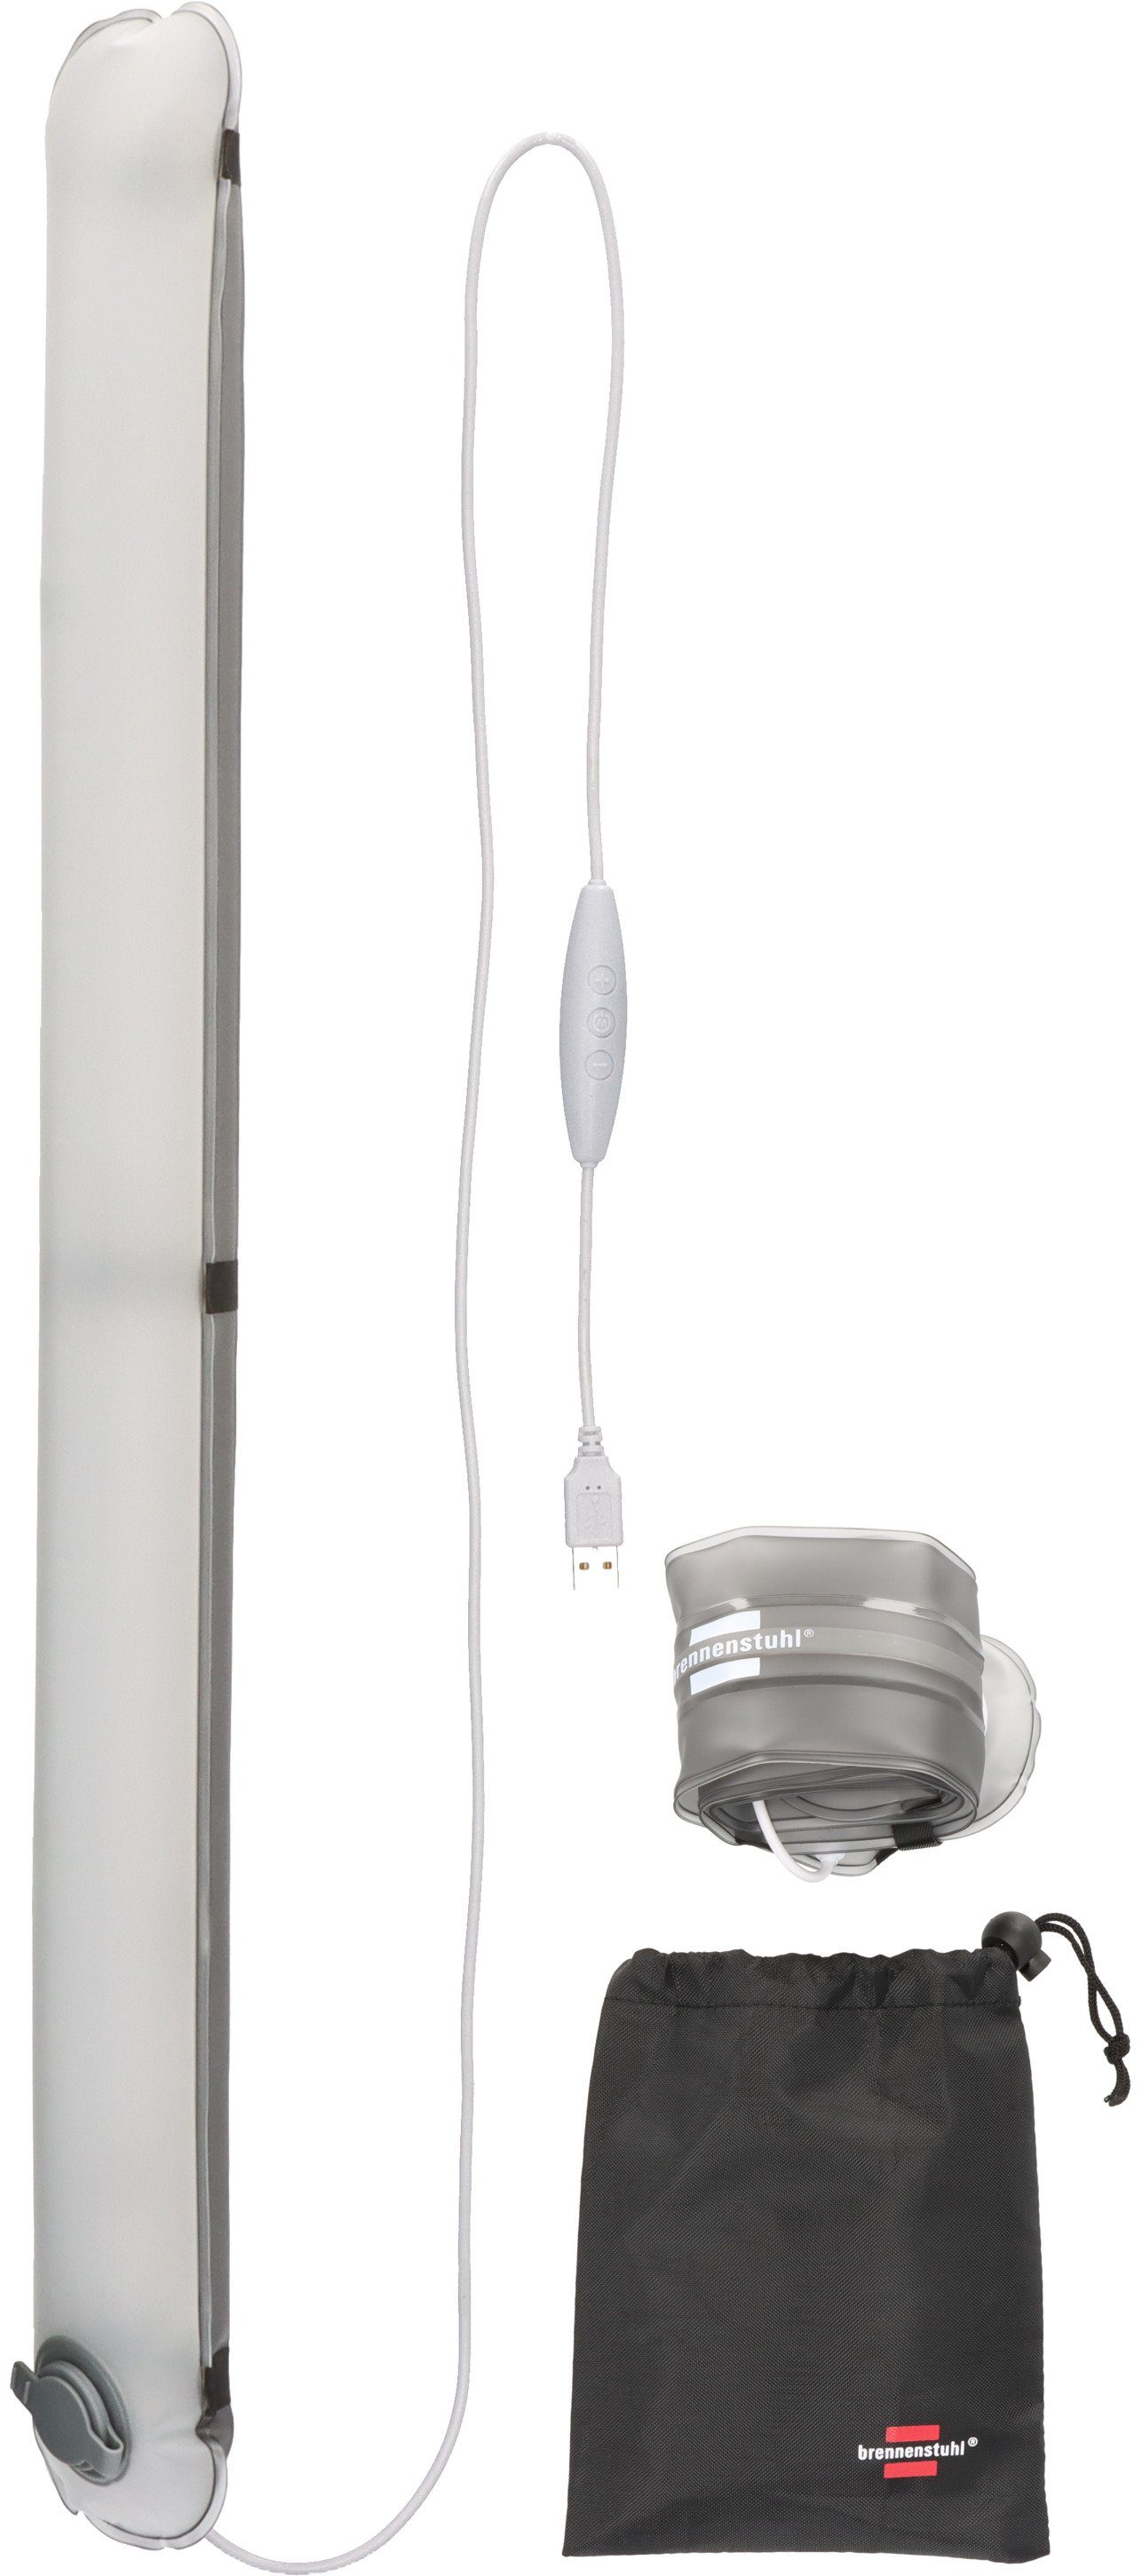 1m dimmbar, LED USB Air stufenlos Kabel LED Gartenleuchte mit 1, Brennenstuhl Röhre aufblasbar, LED OLI fest integriert, faltbare